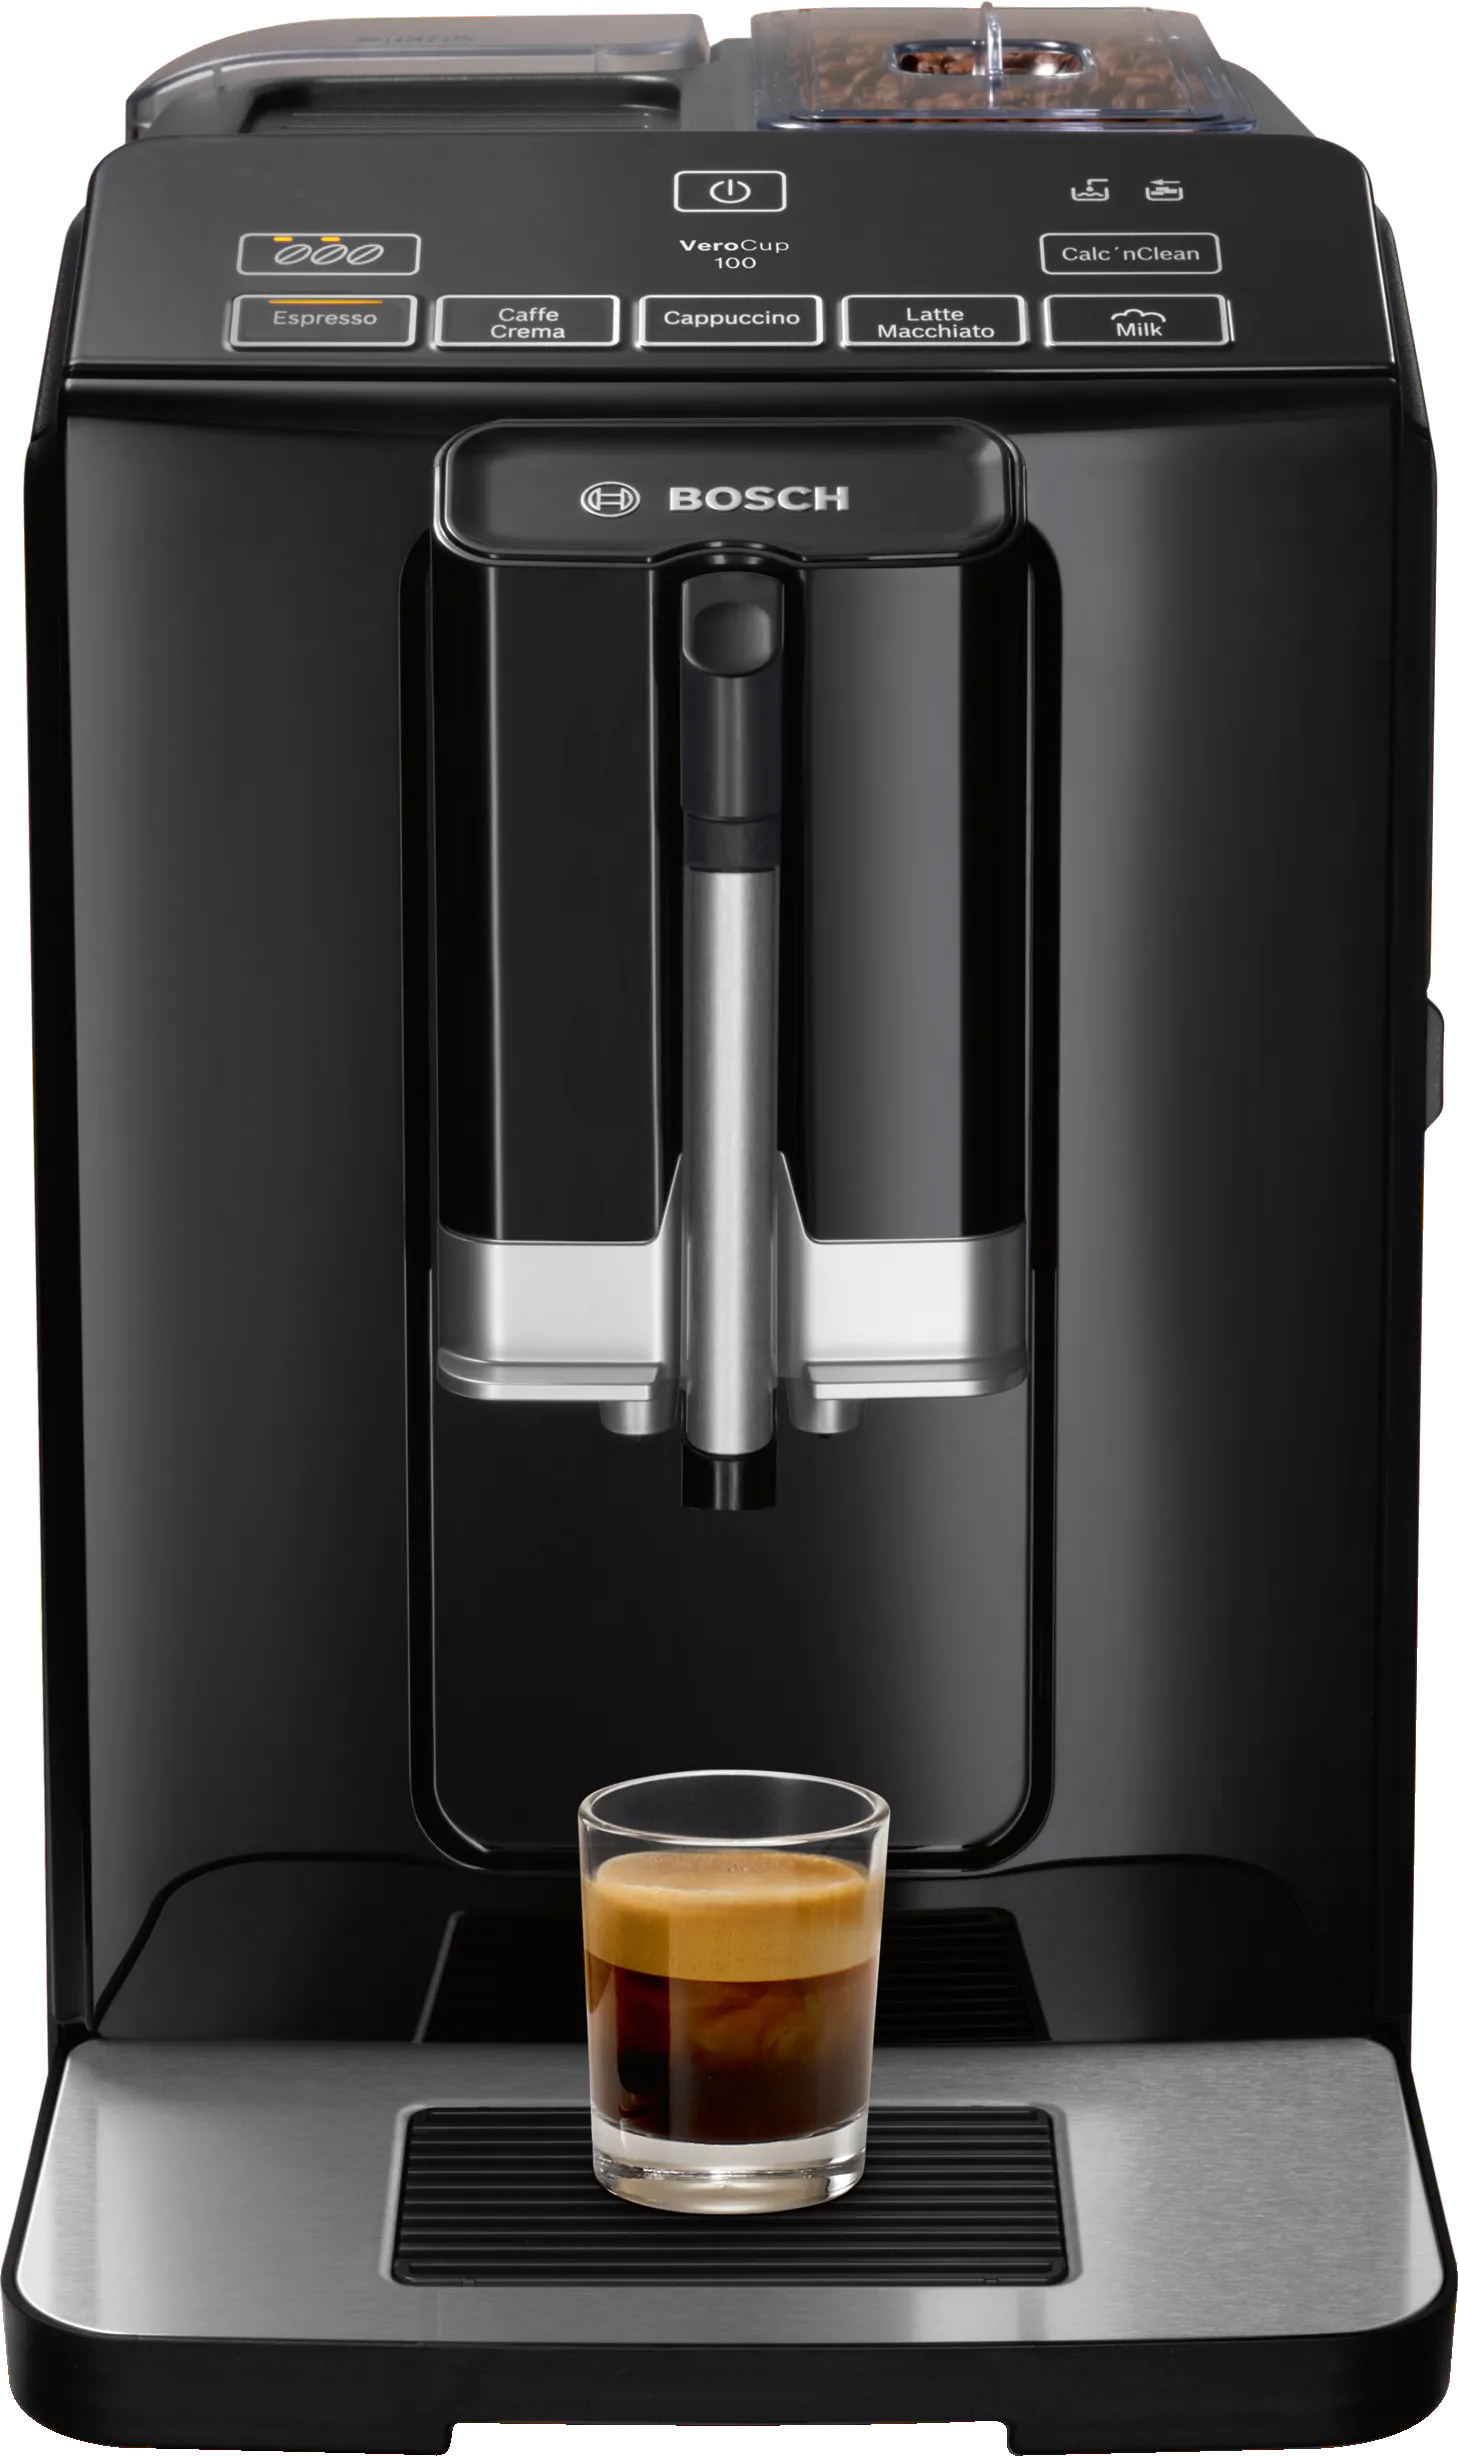 Aparat za kafu, tis30129rw potpuno automatizovan, verocup 100, funkcija samočišćenja, 1300 w